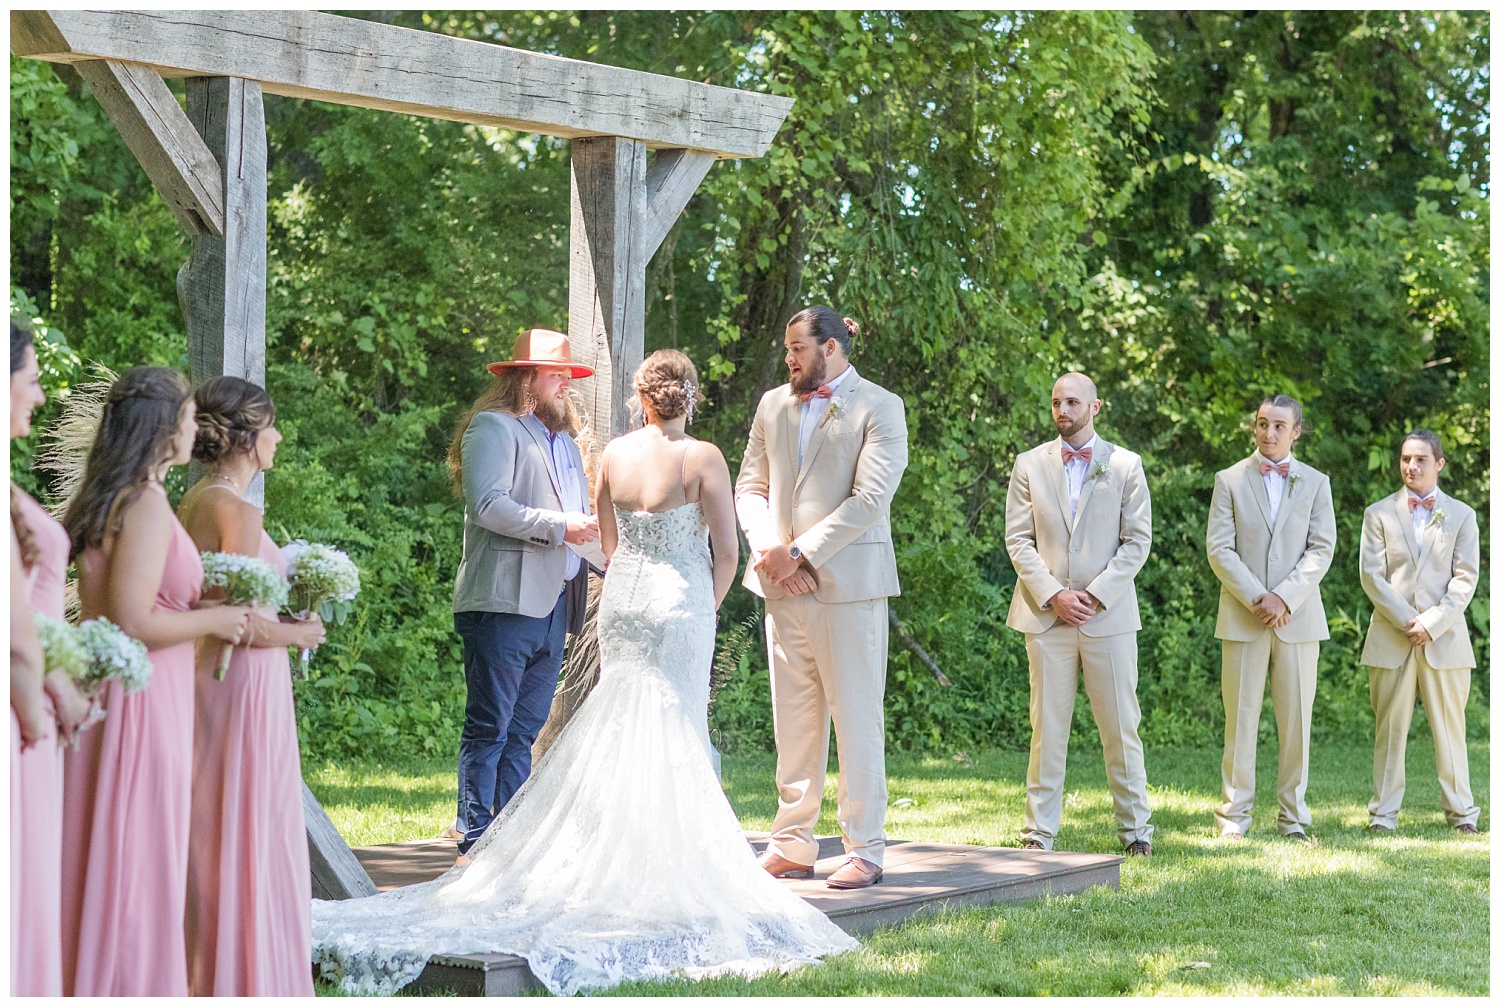 ourdoor wedding ceremony at the Village Barn in Ohio